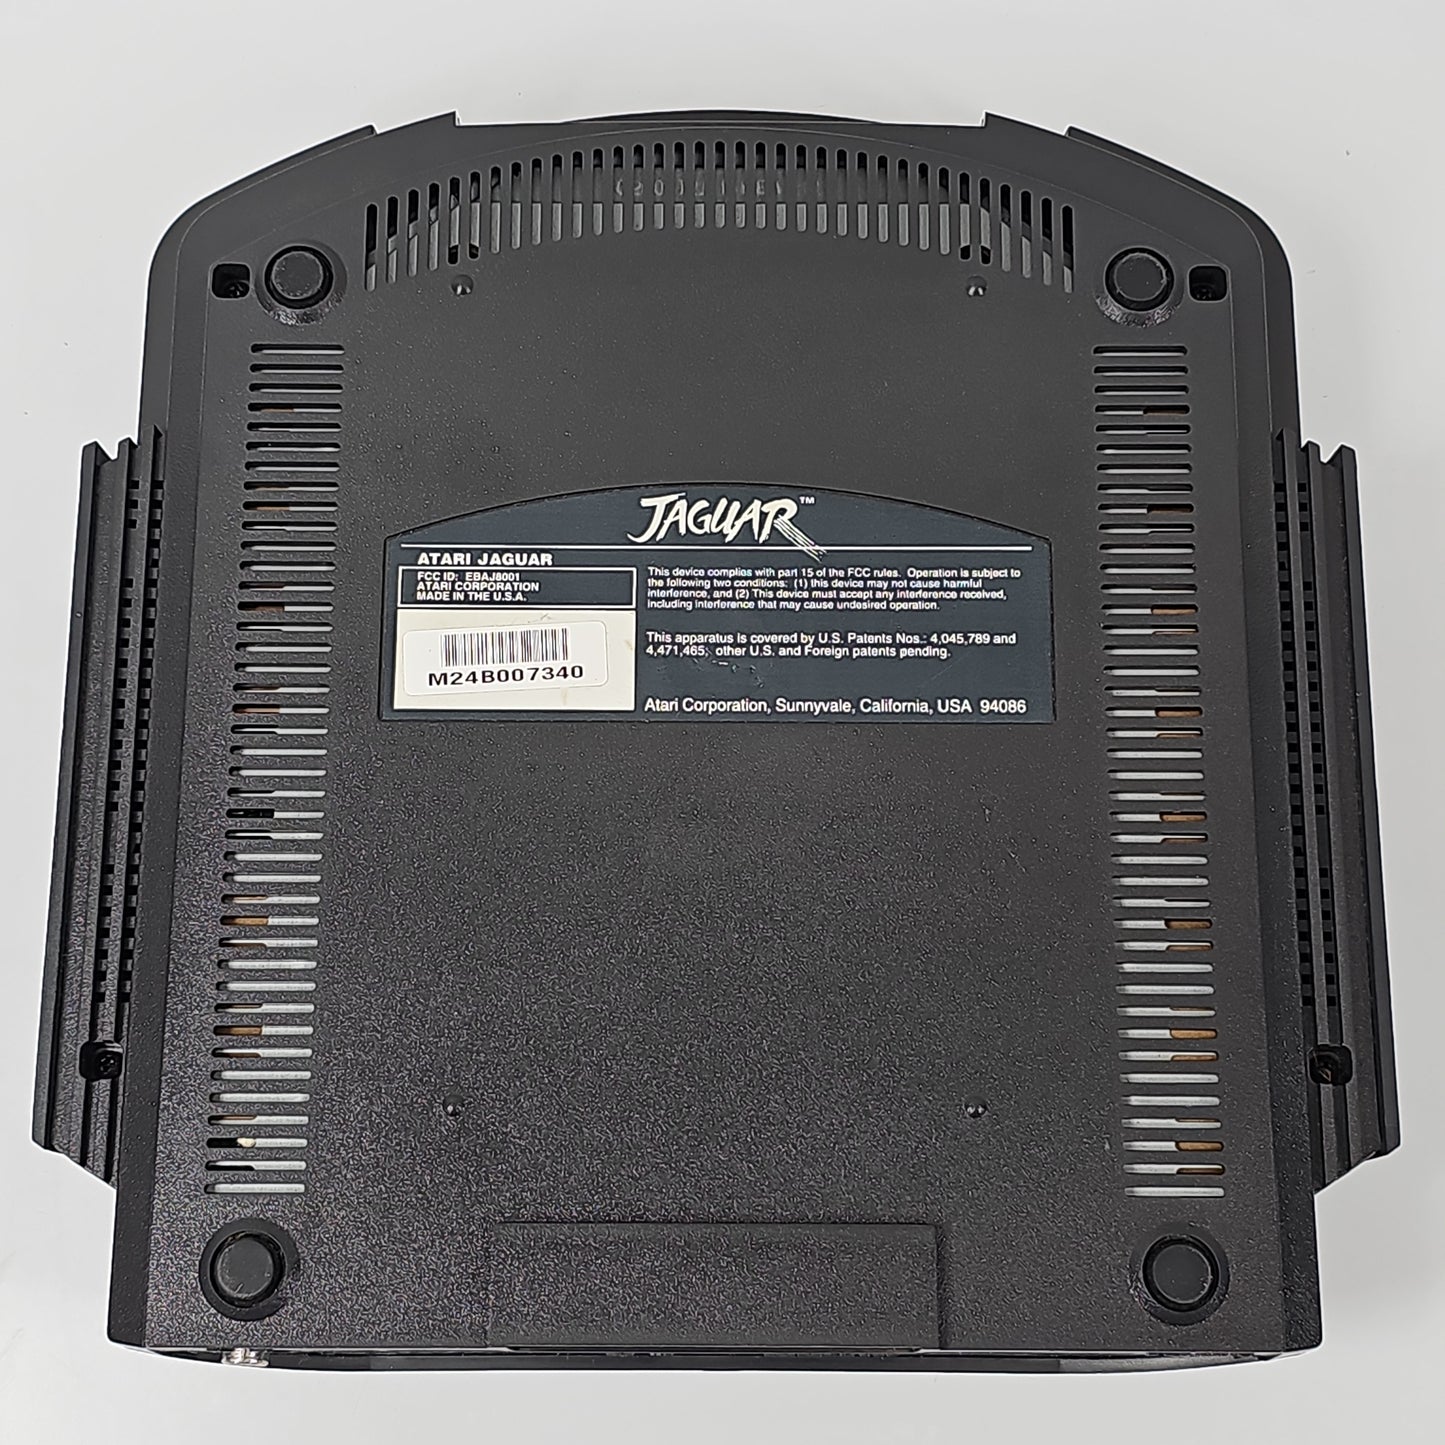 Atari Jaguar 64-Bit Interactive Multimedia System Video Game Console J8001